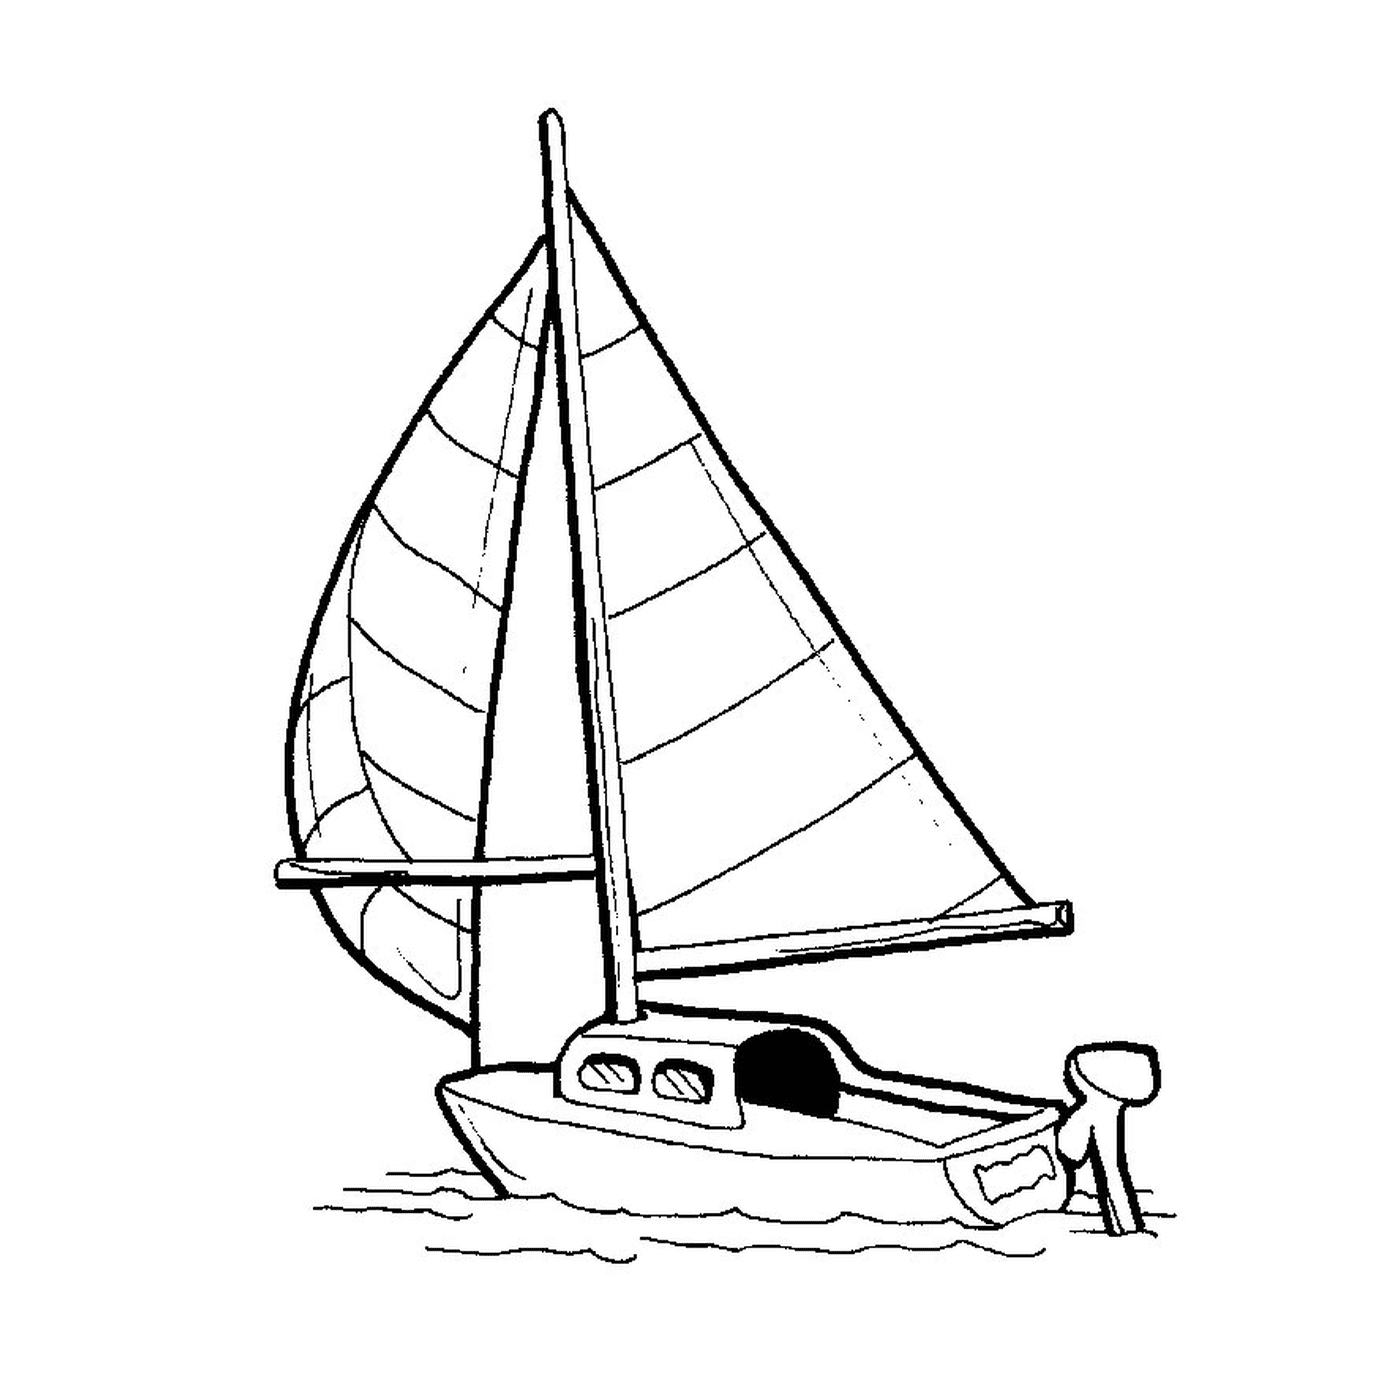  Гоночная лодка показана на рисунке 